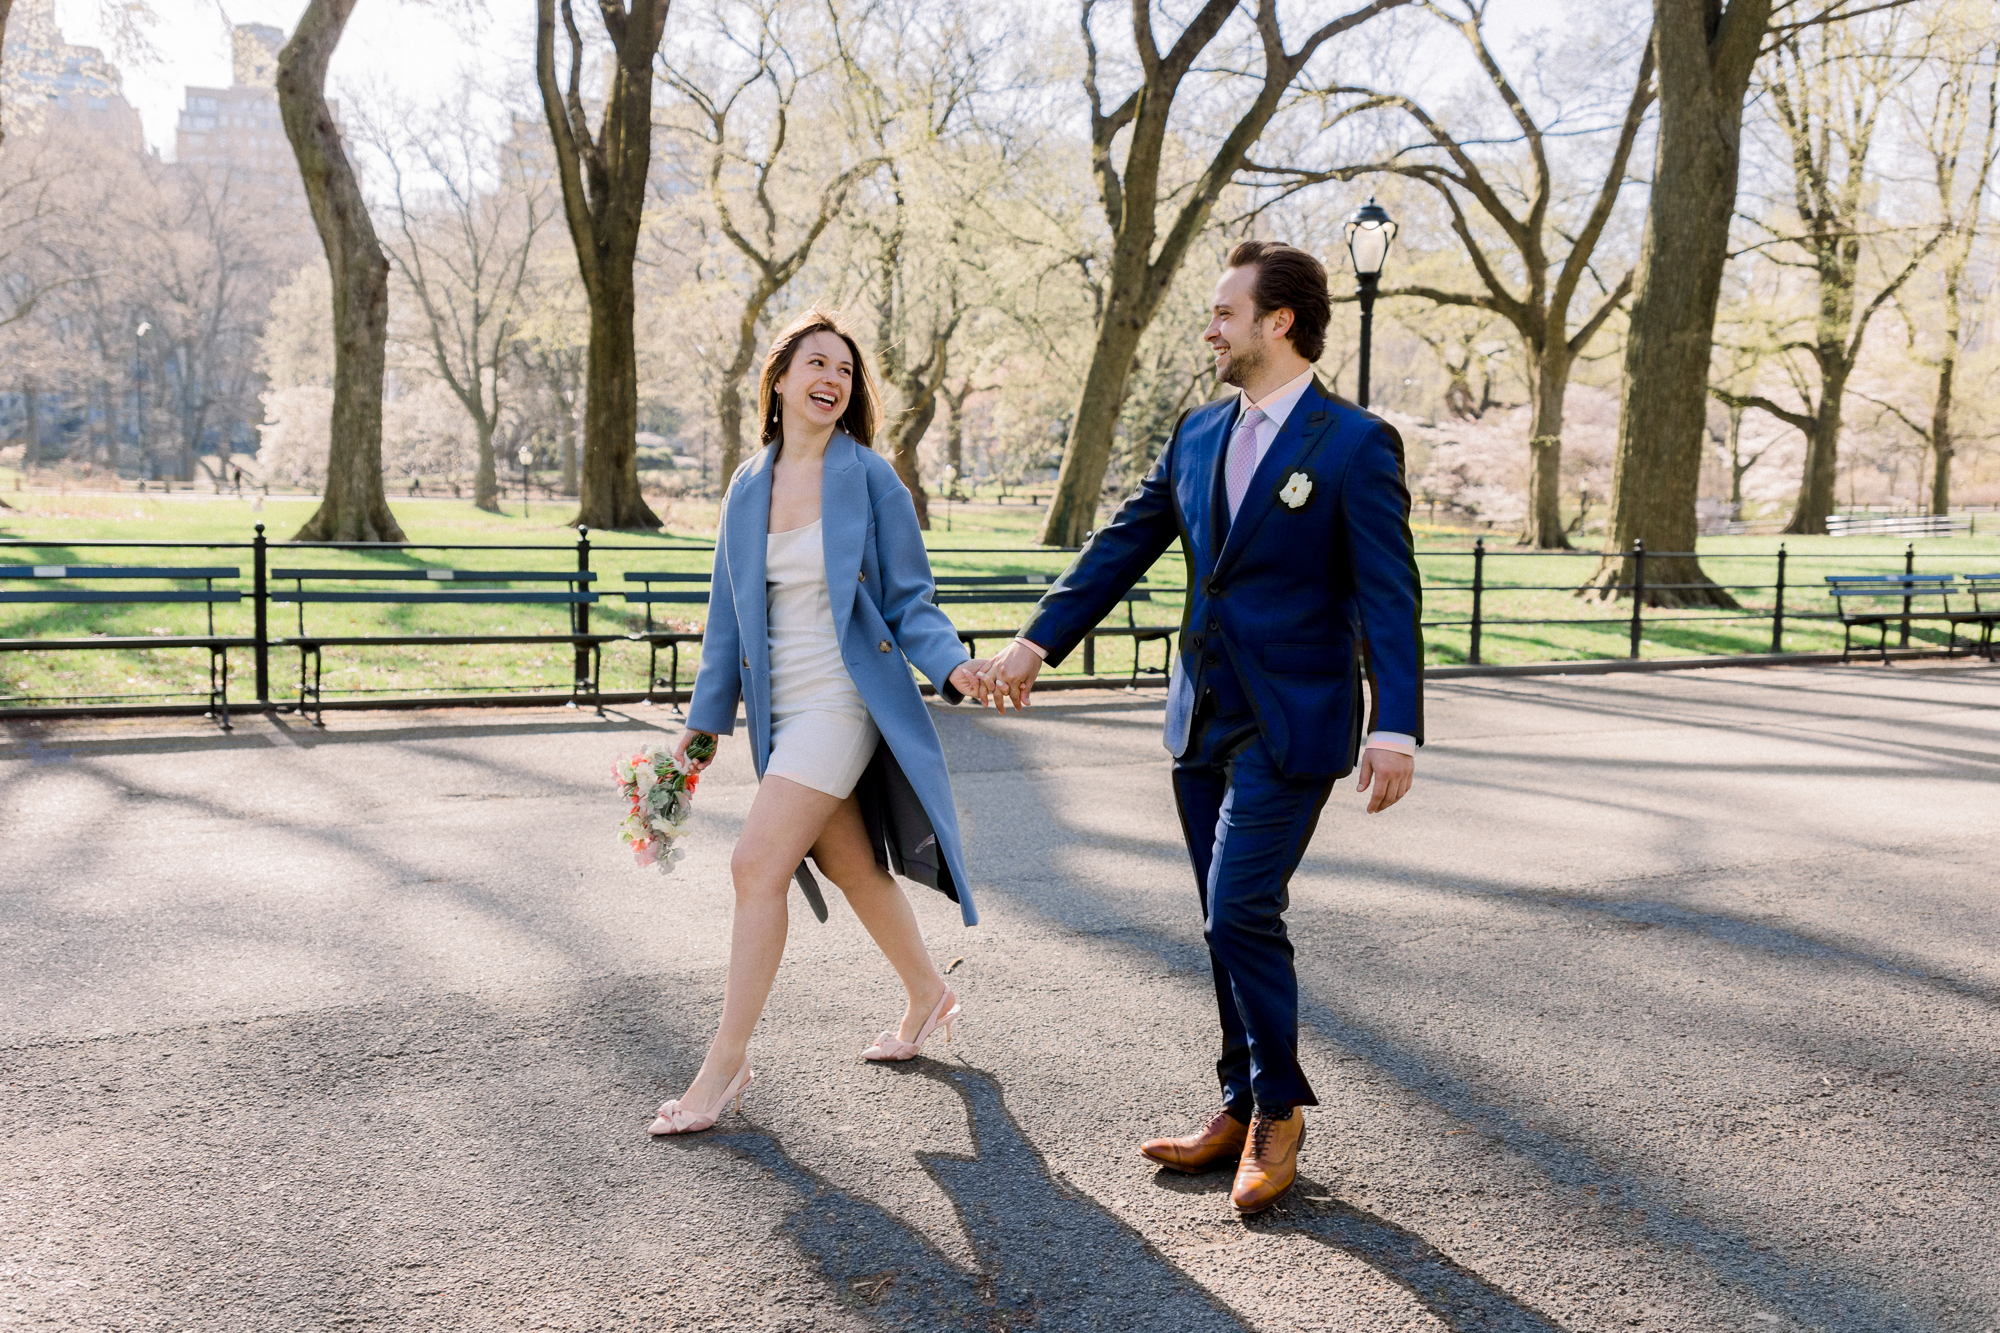 Timeless Bow Bridge Wedding Photos Among Central Park's Spring Cherry Blossoms